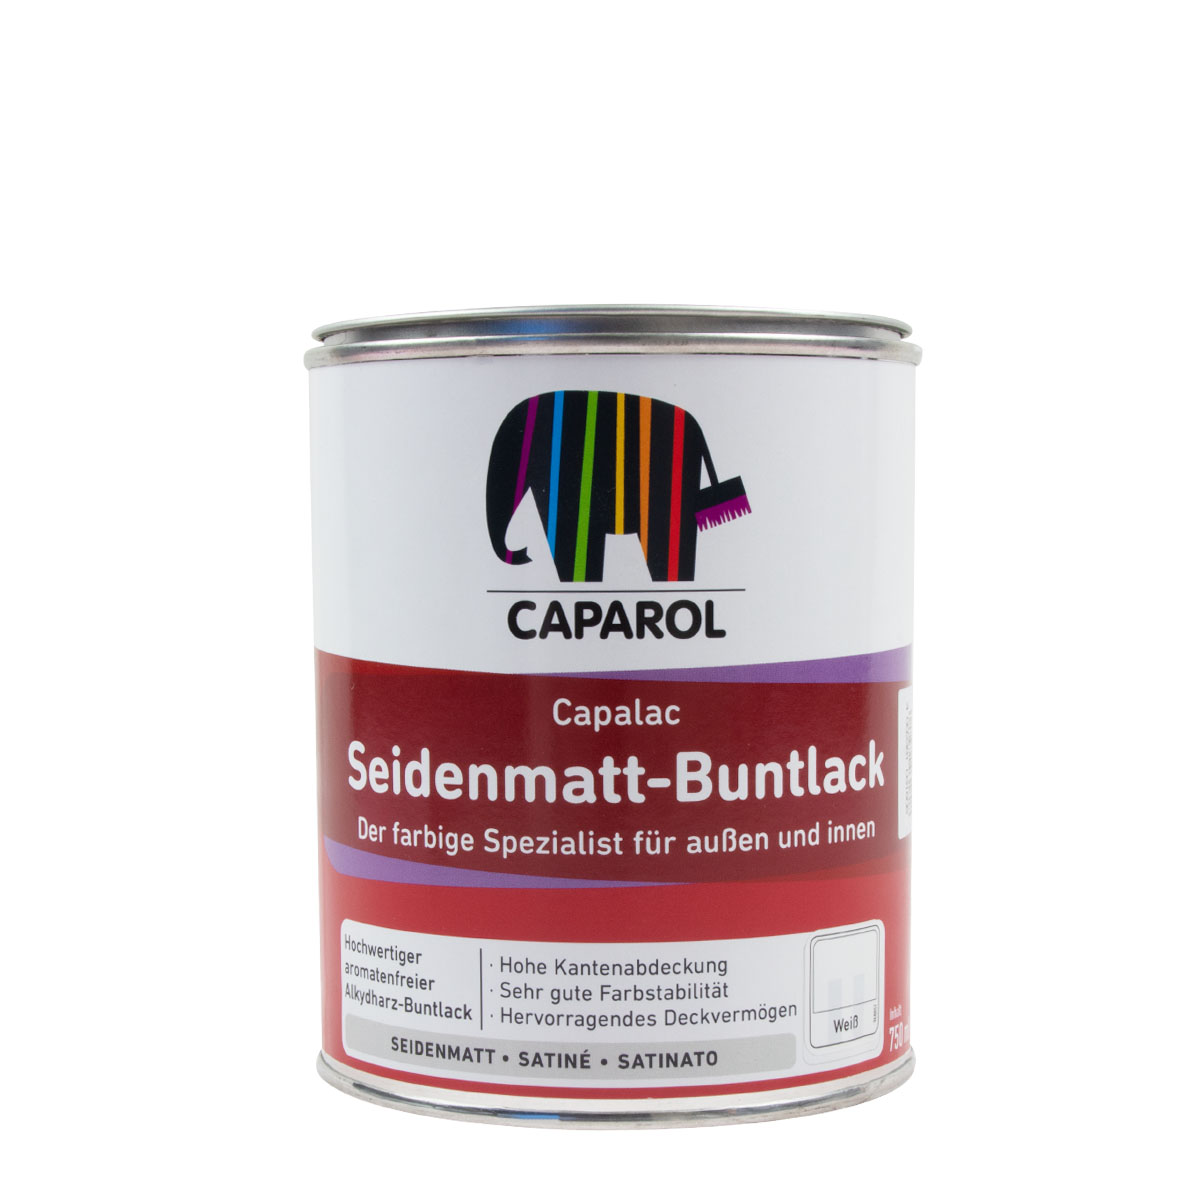 Caparol Capalac Seidenmatt-Buntlack 0,75L weiss, Alkydharz-Buntlack